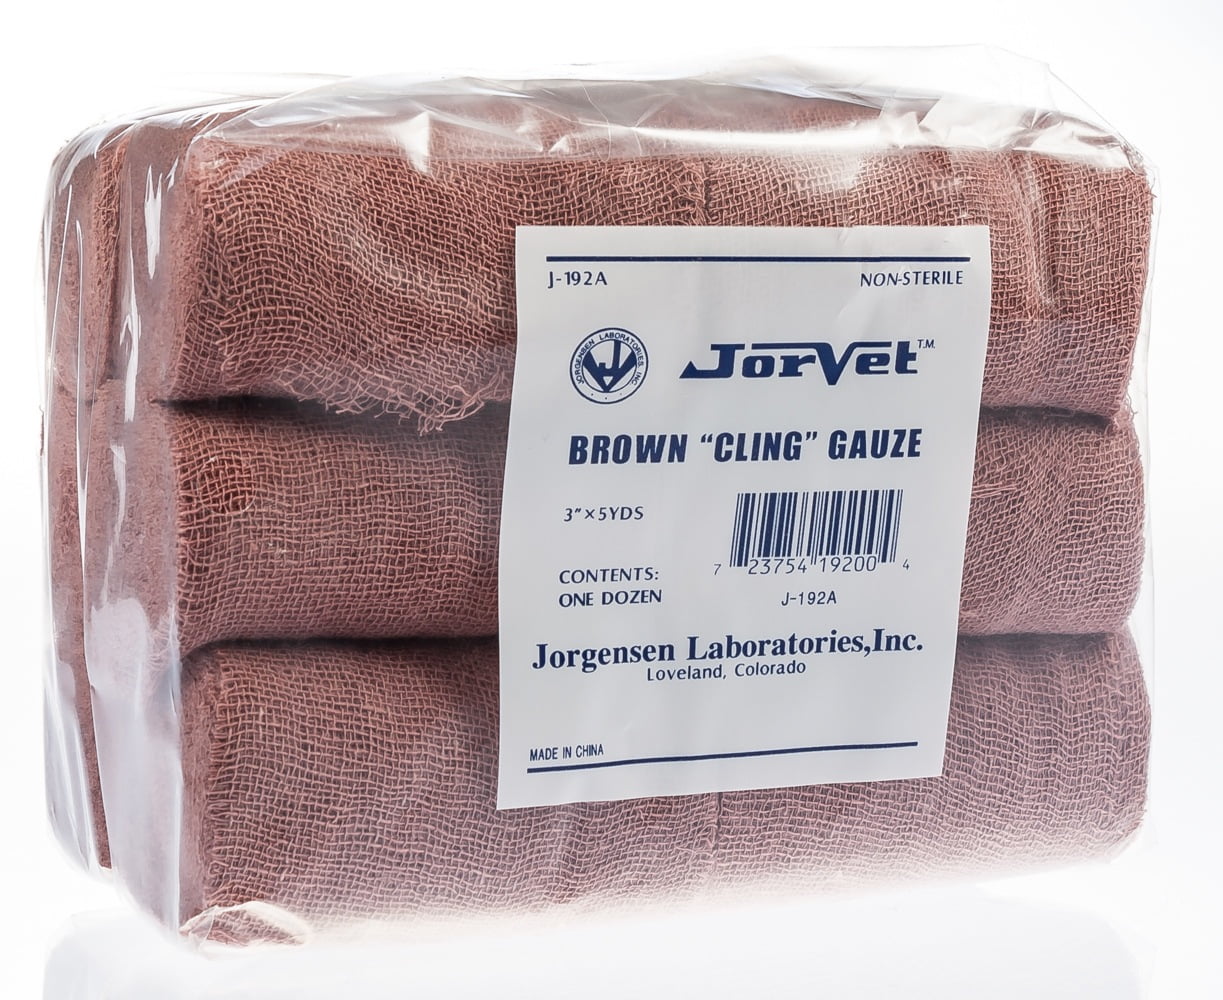 NEW Jorvet Cling Gauze Brown Cotton Package Of 12 